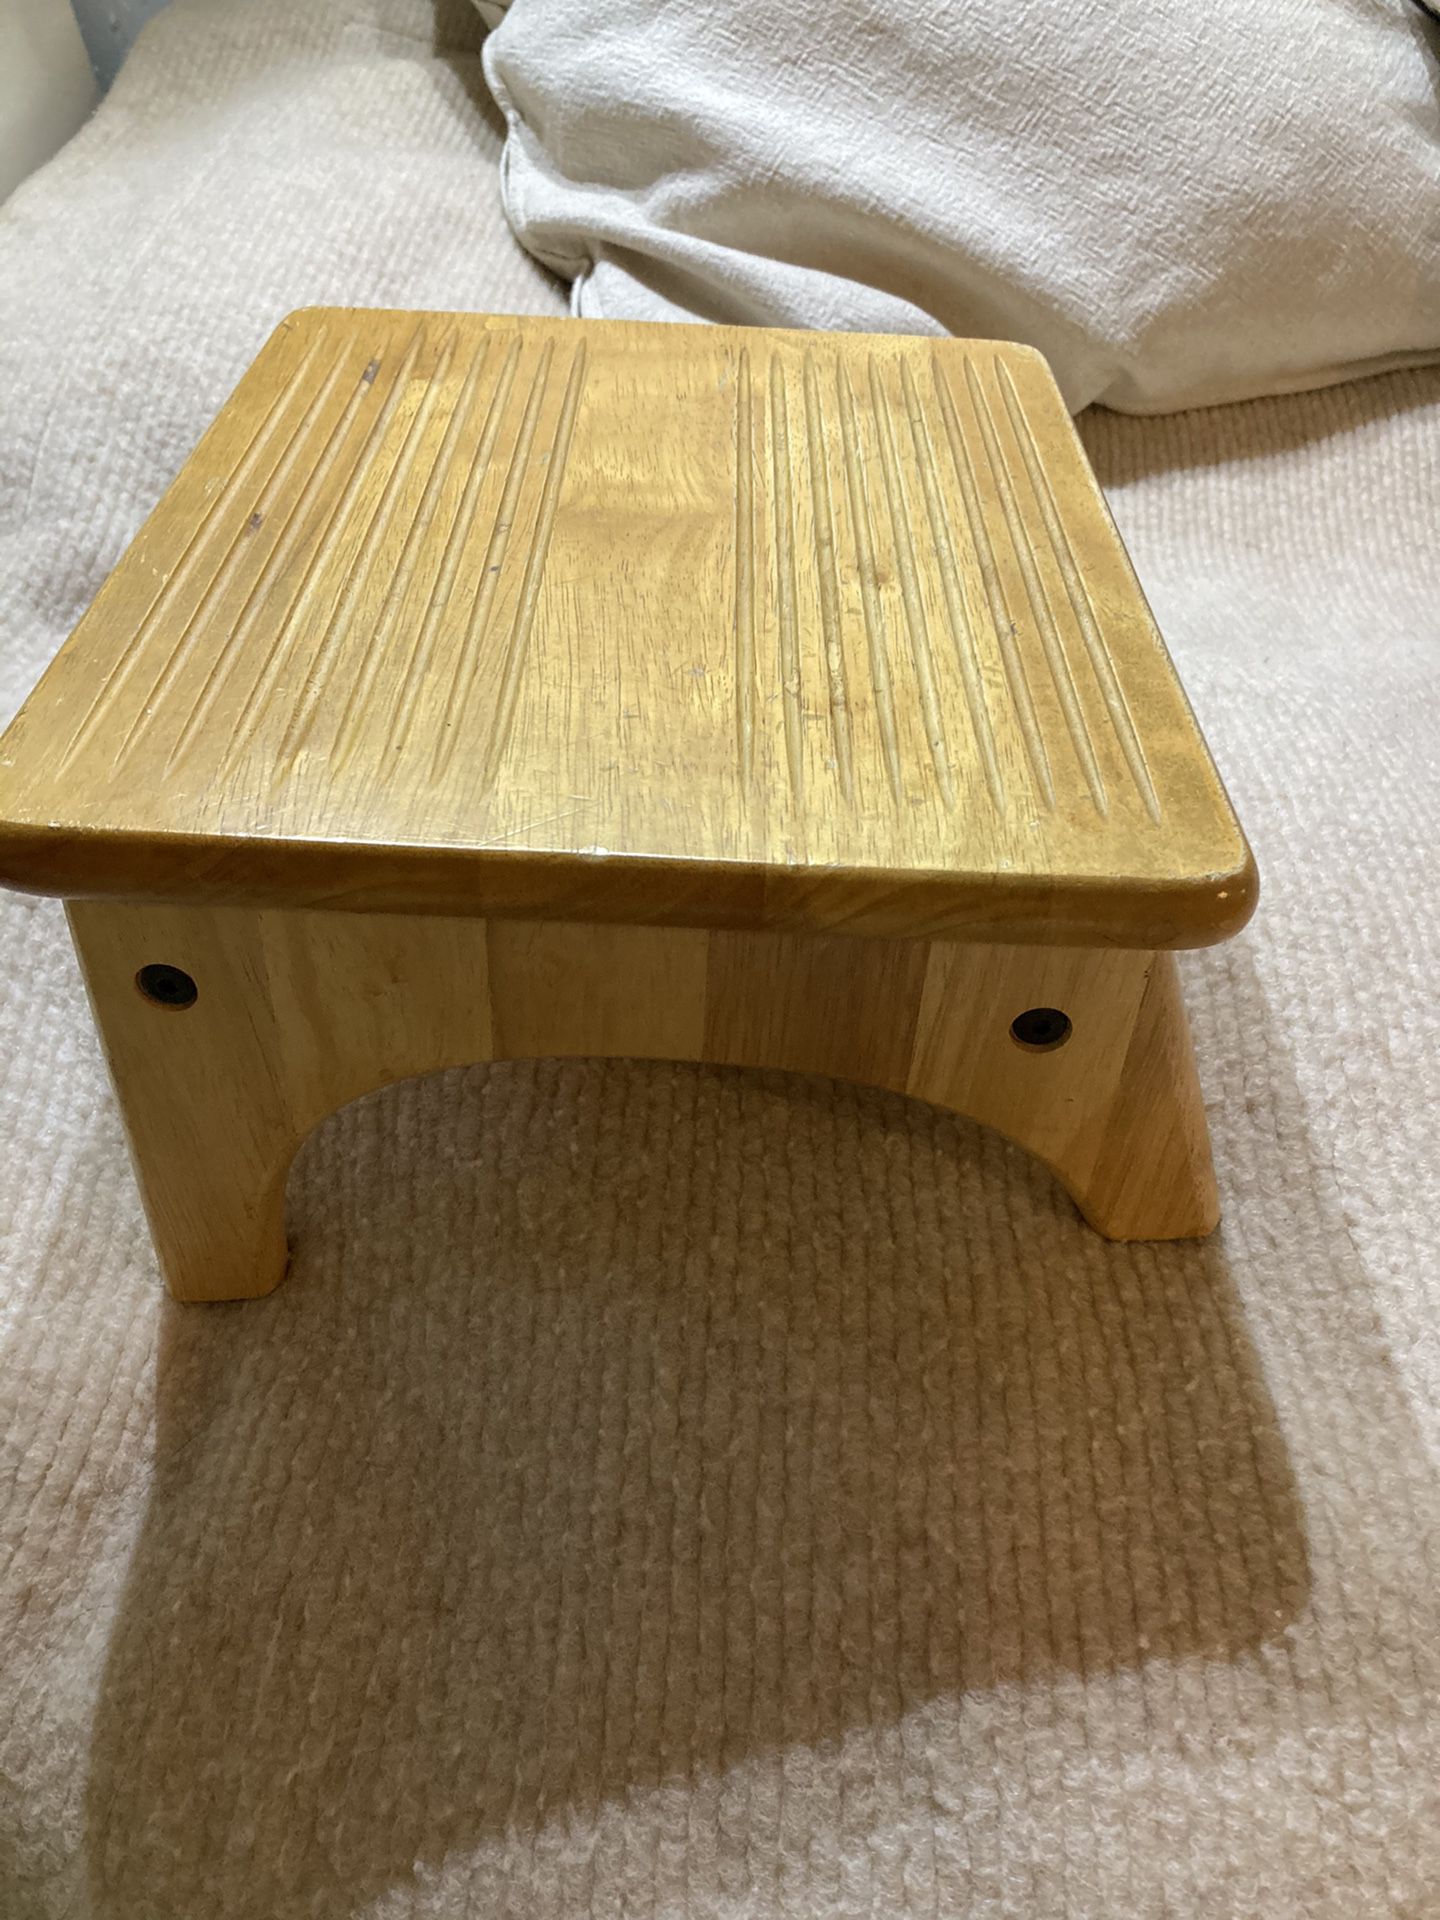 Foot stool/ wooden